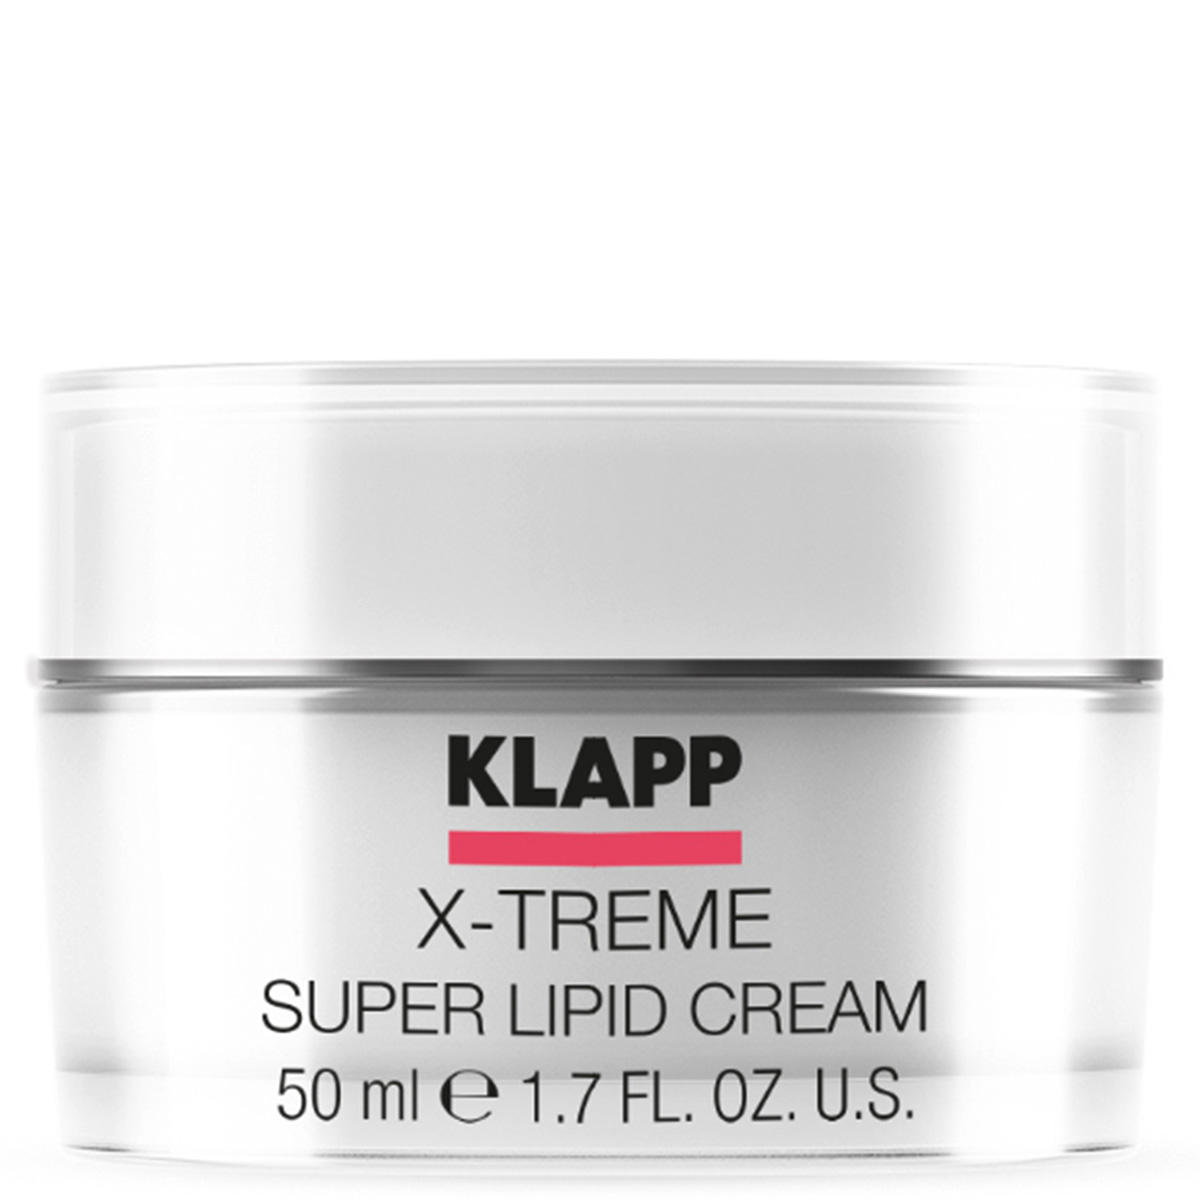 KLAPP X-TREME Super Lipid Cream 50 ml - 1